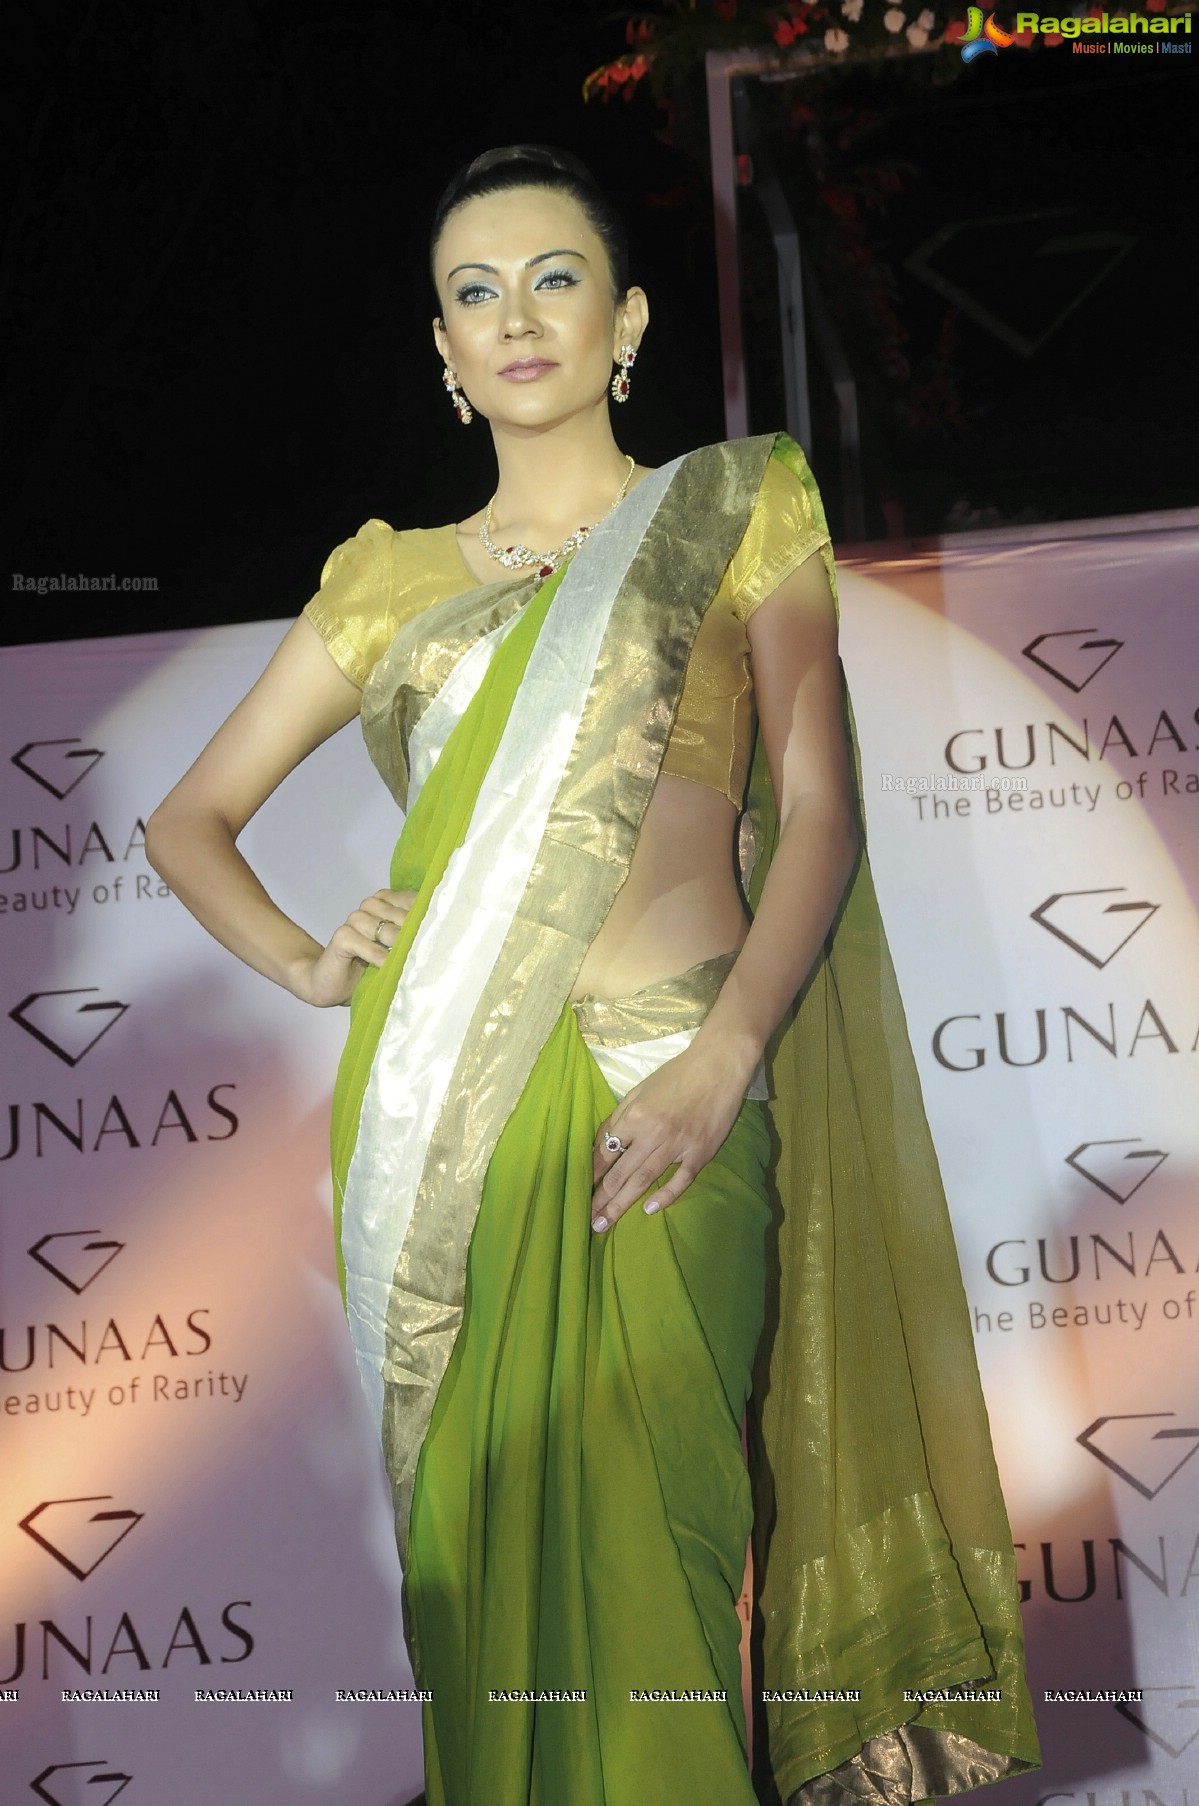 Gunaas Diamond Jewellery Showroom Launch